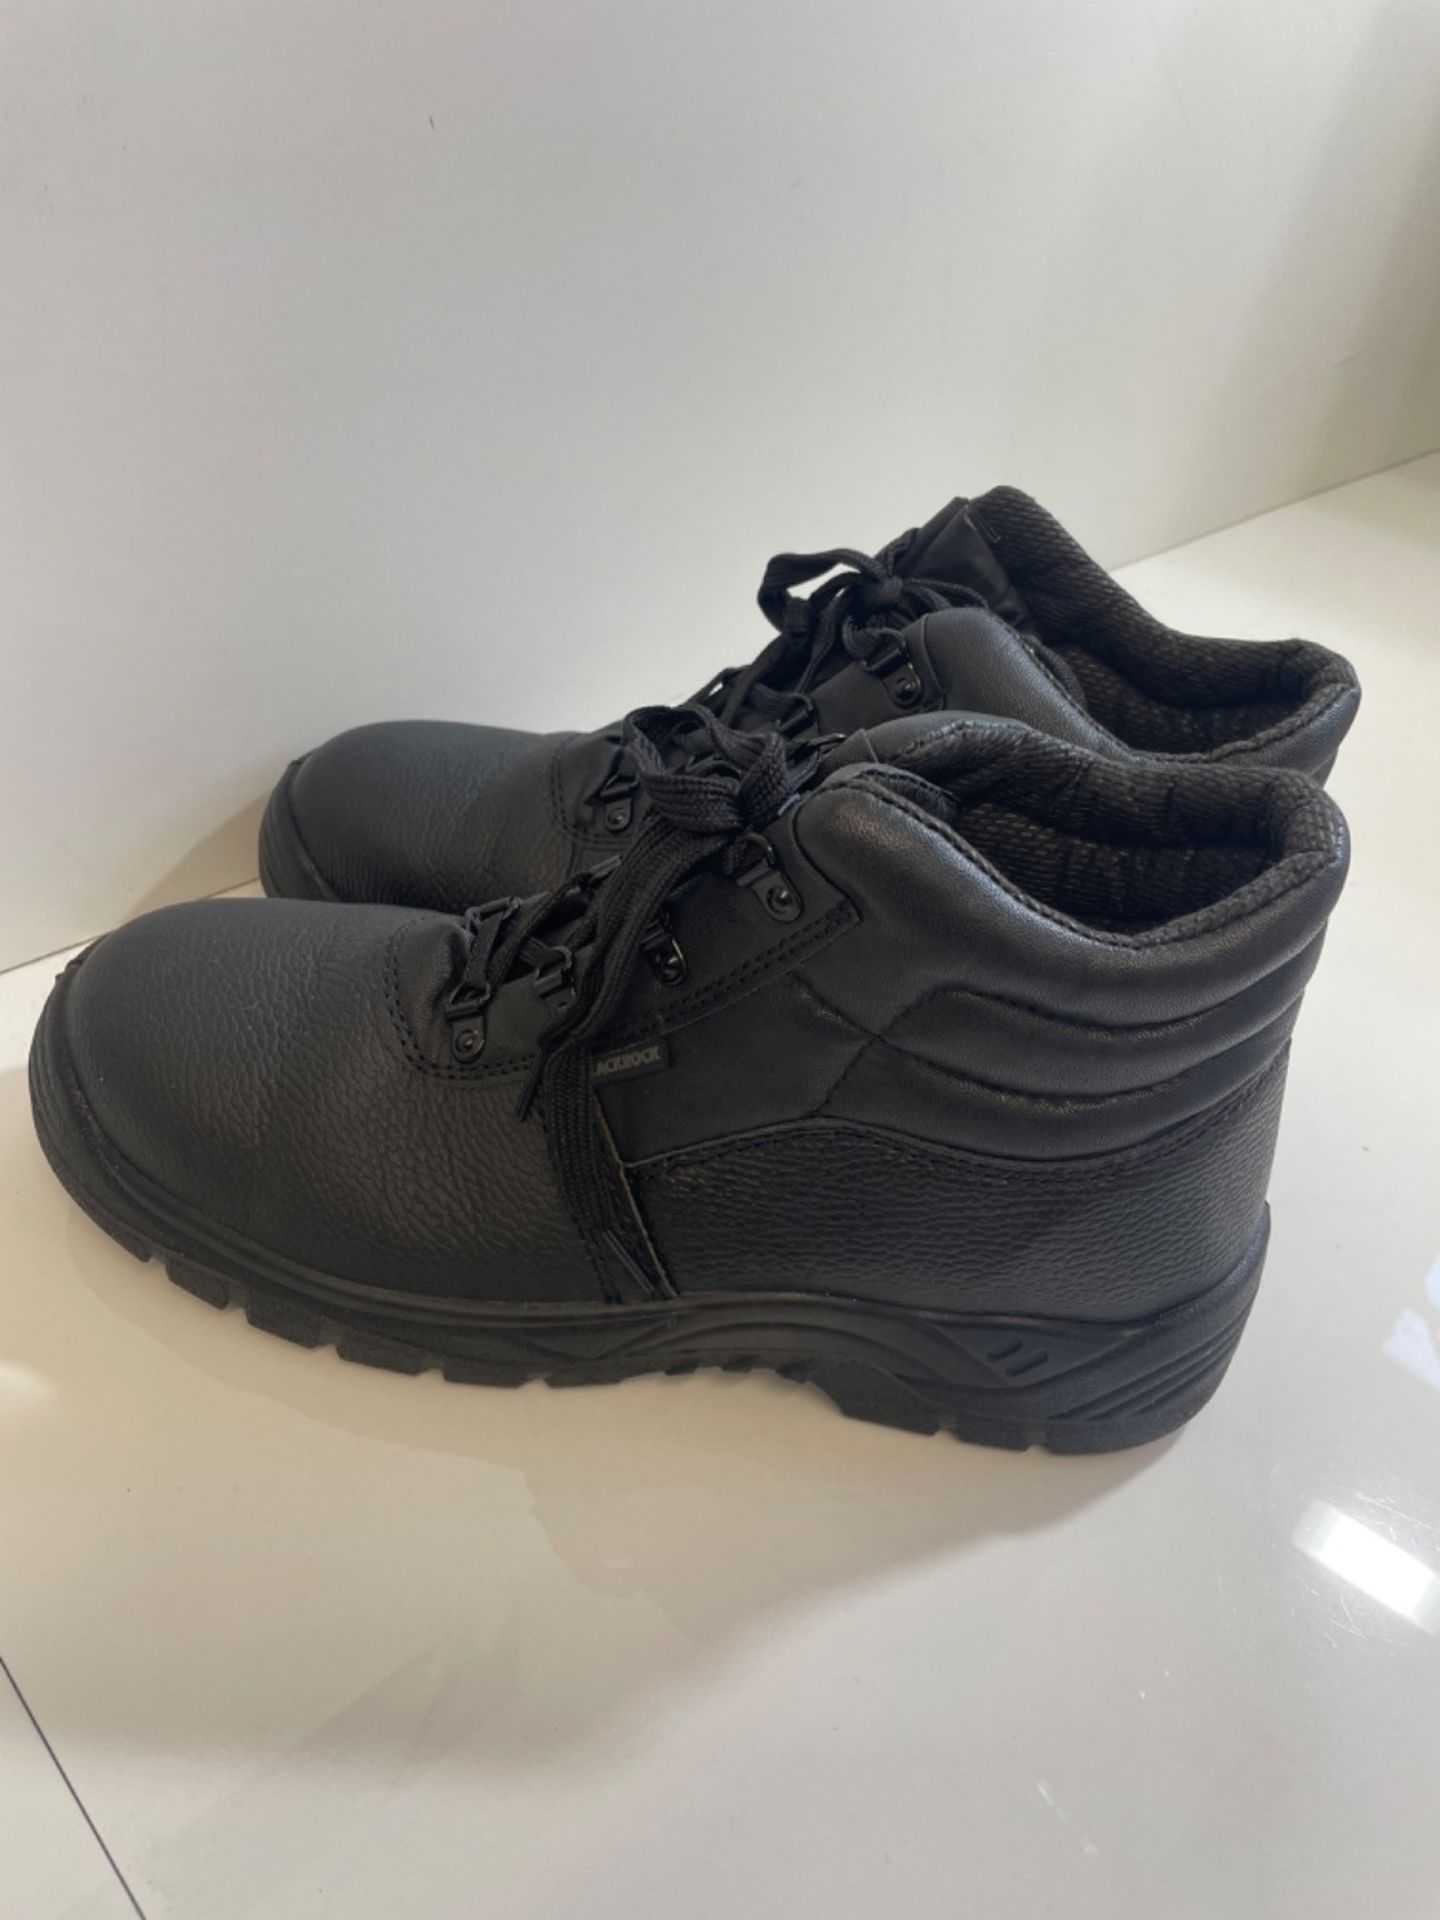 Blackrock SB-P SRC Safety Chukka Work Boots, Mens Womens Steel Toe Cap Black Leather, Walking Hiker - Image 2 of 3